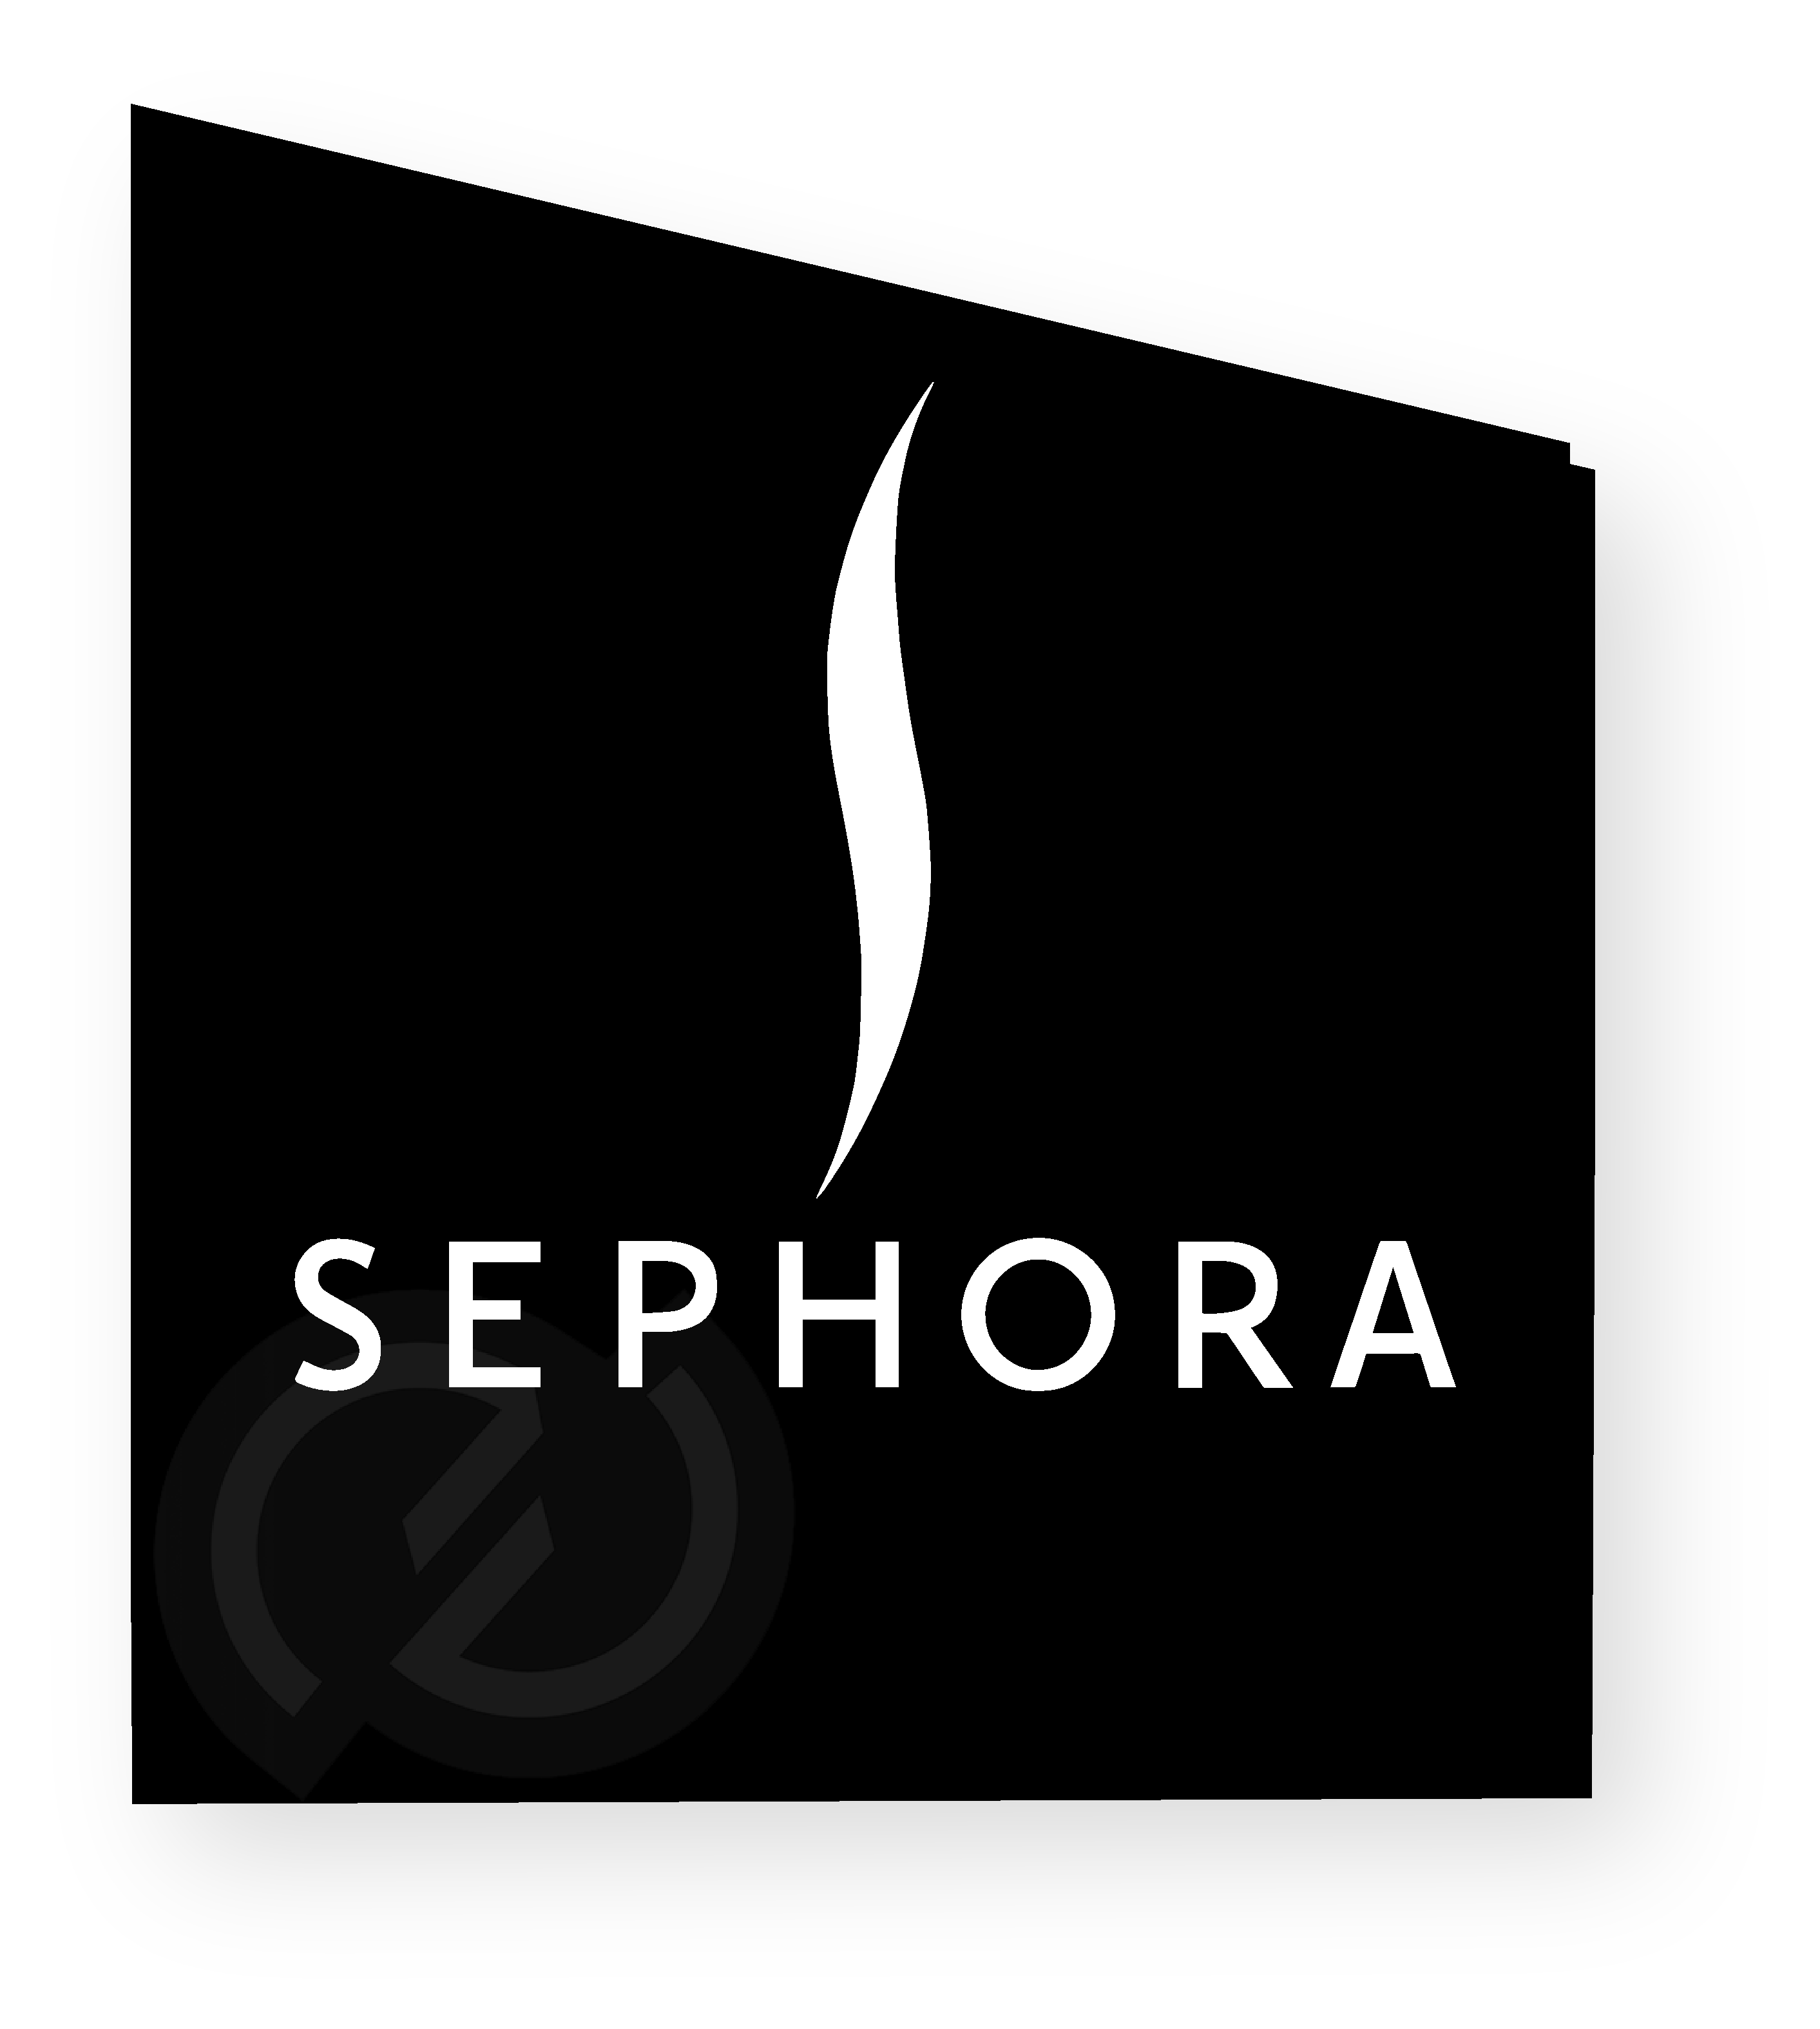 Image logo Sephora